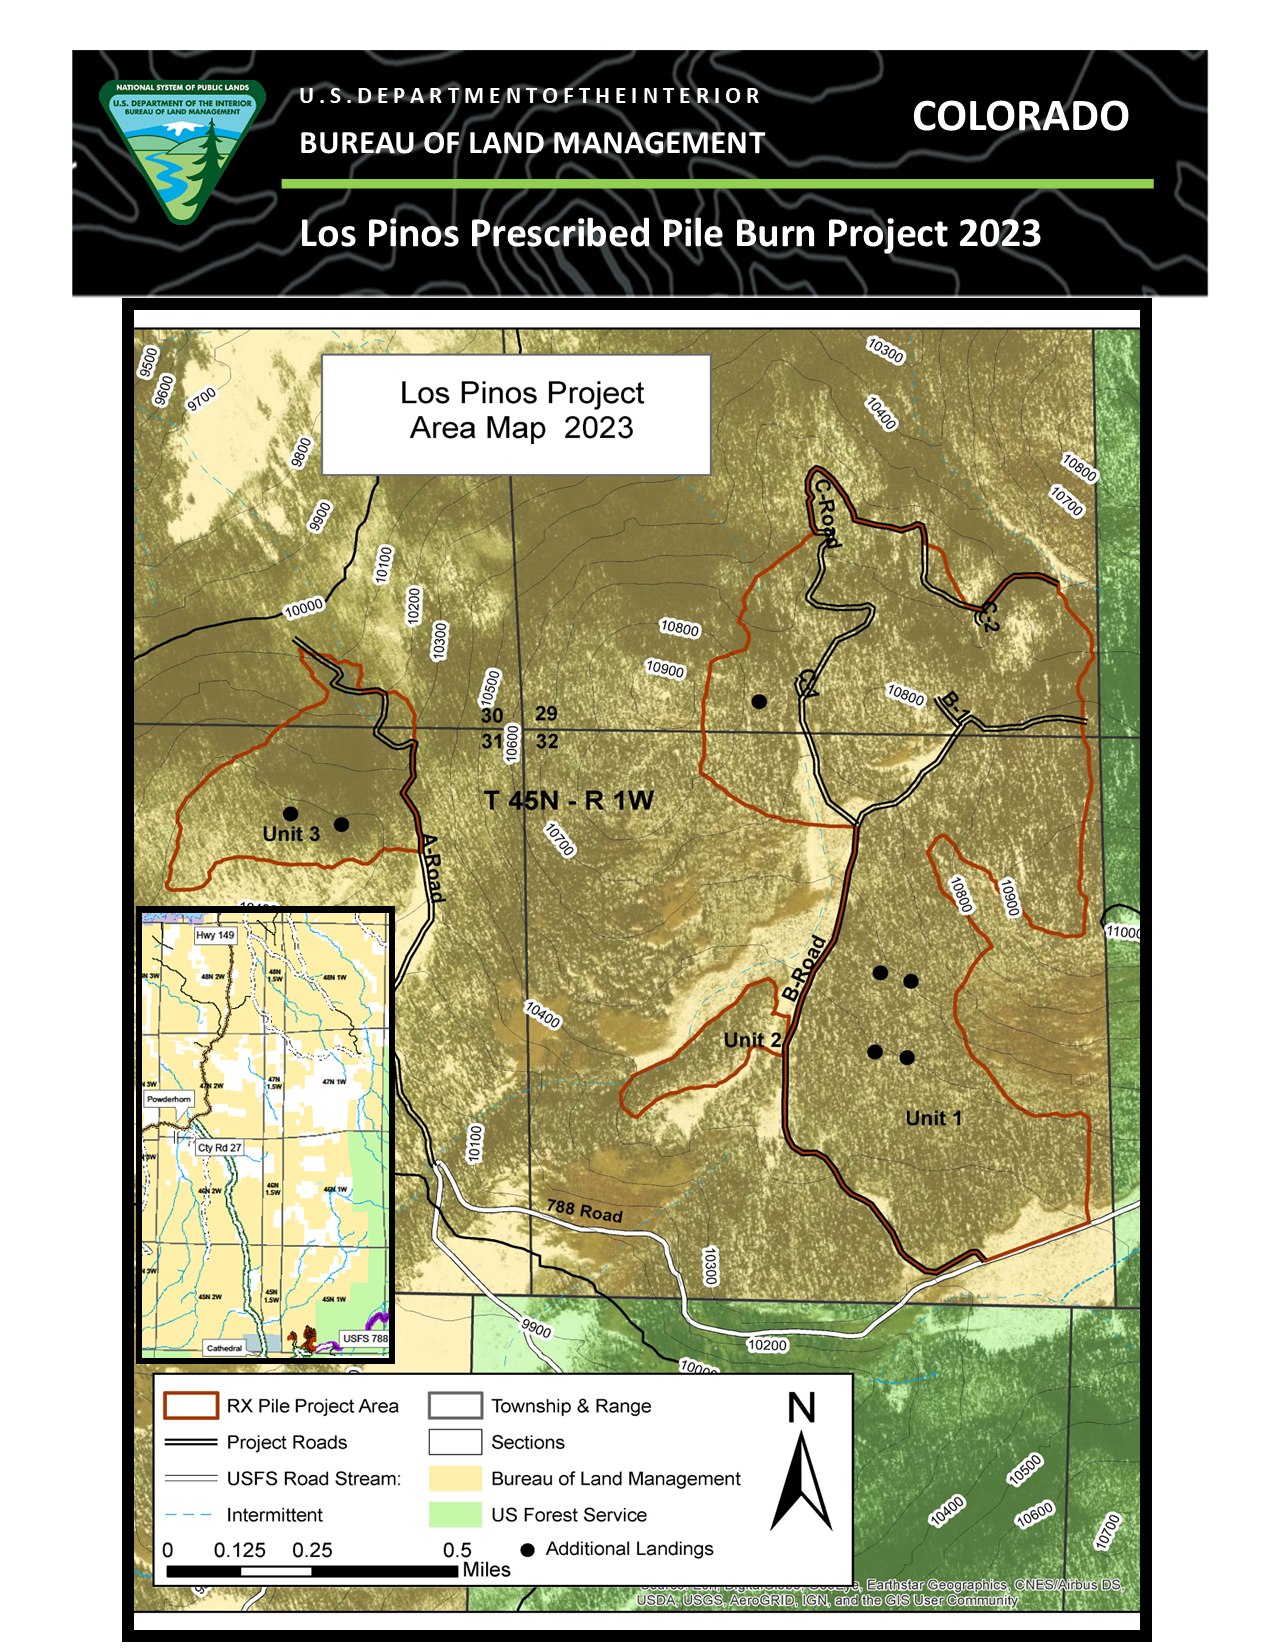 Los Pinos Prescribed Fire Pile Project Map 2023